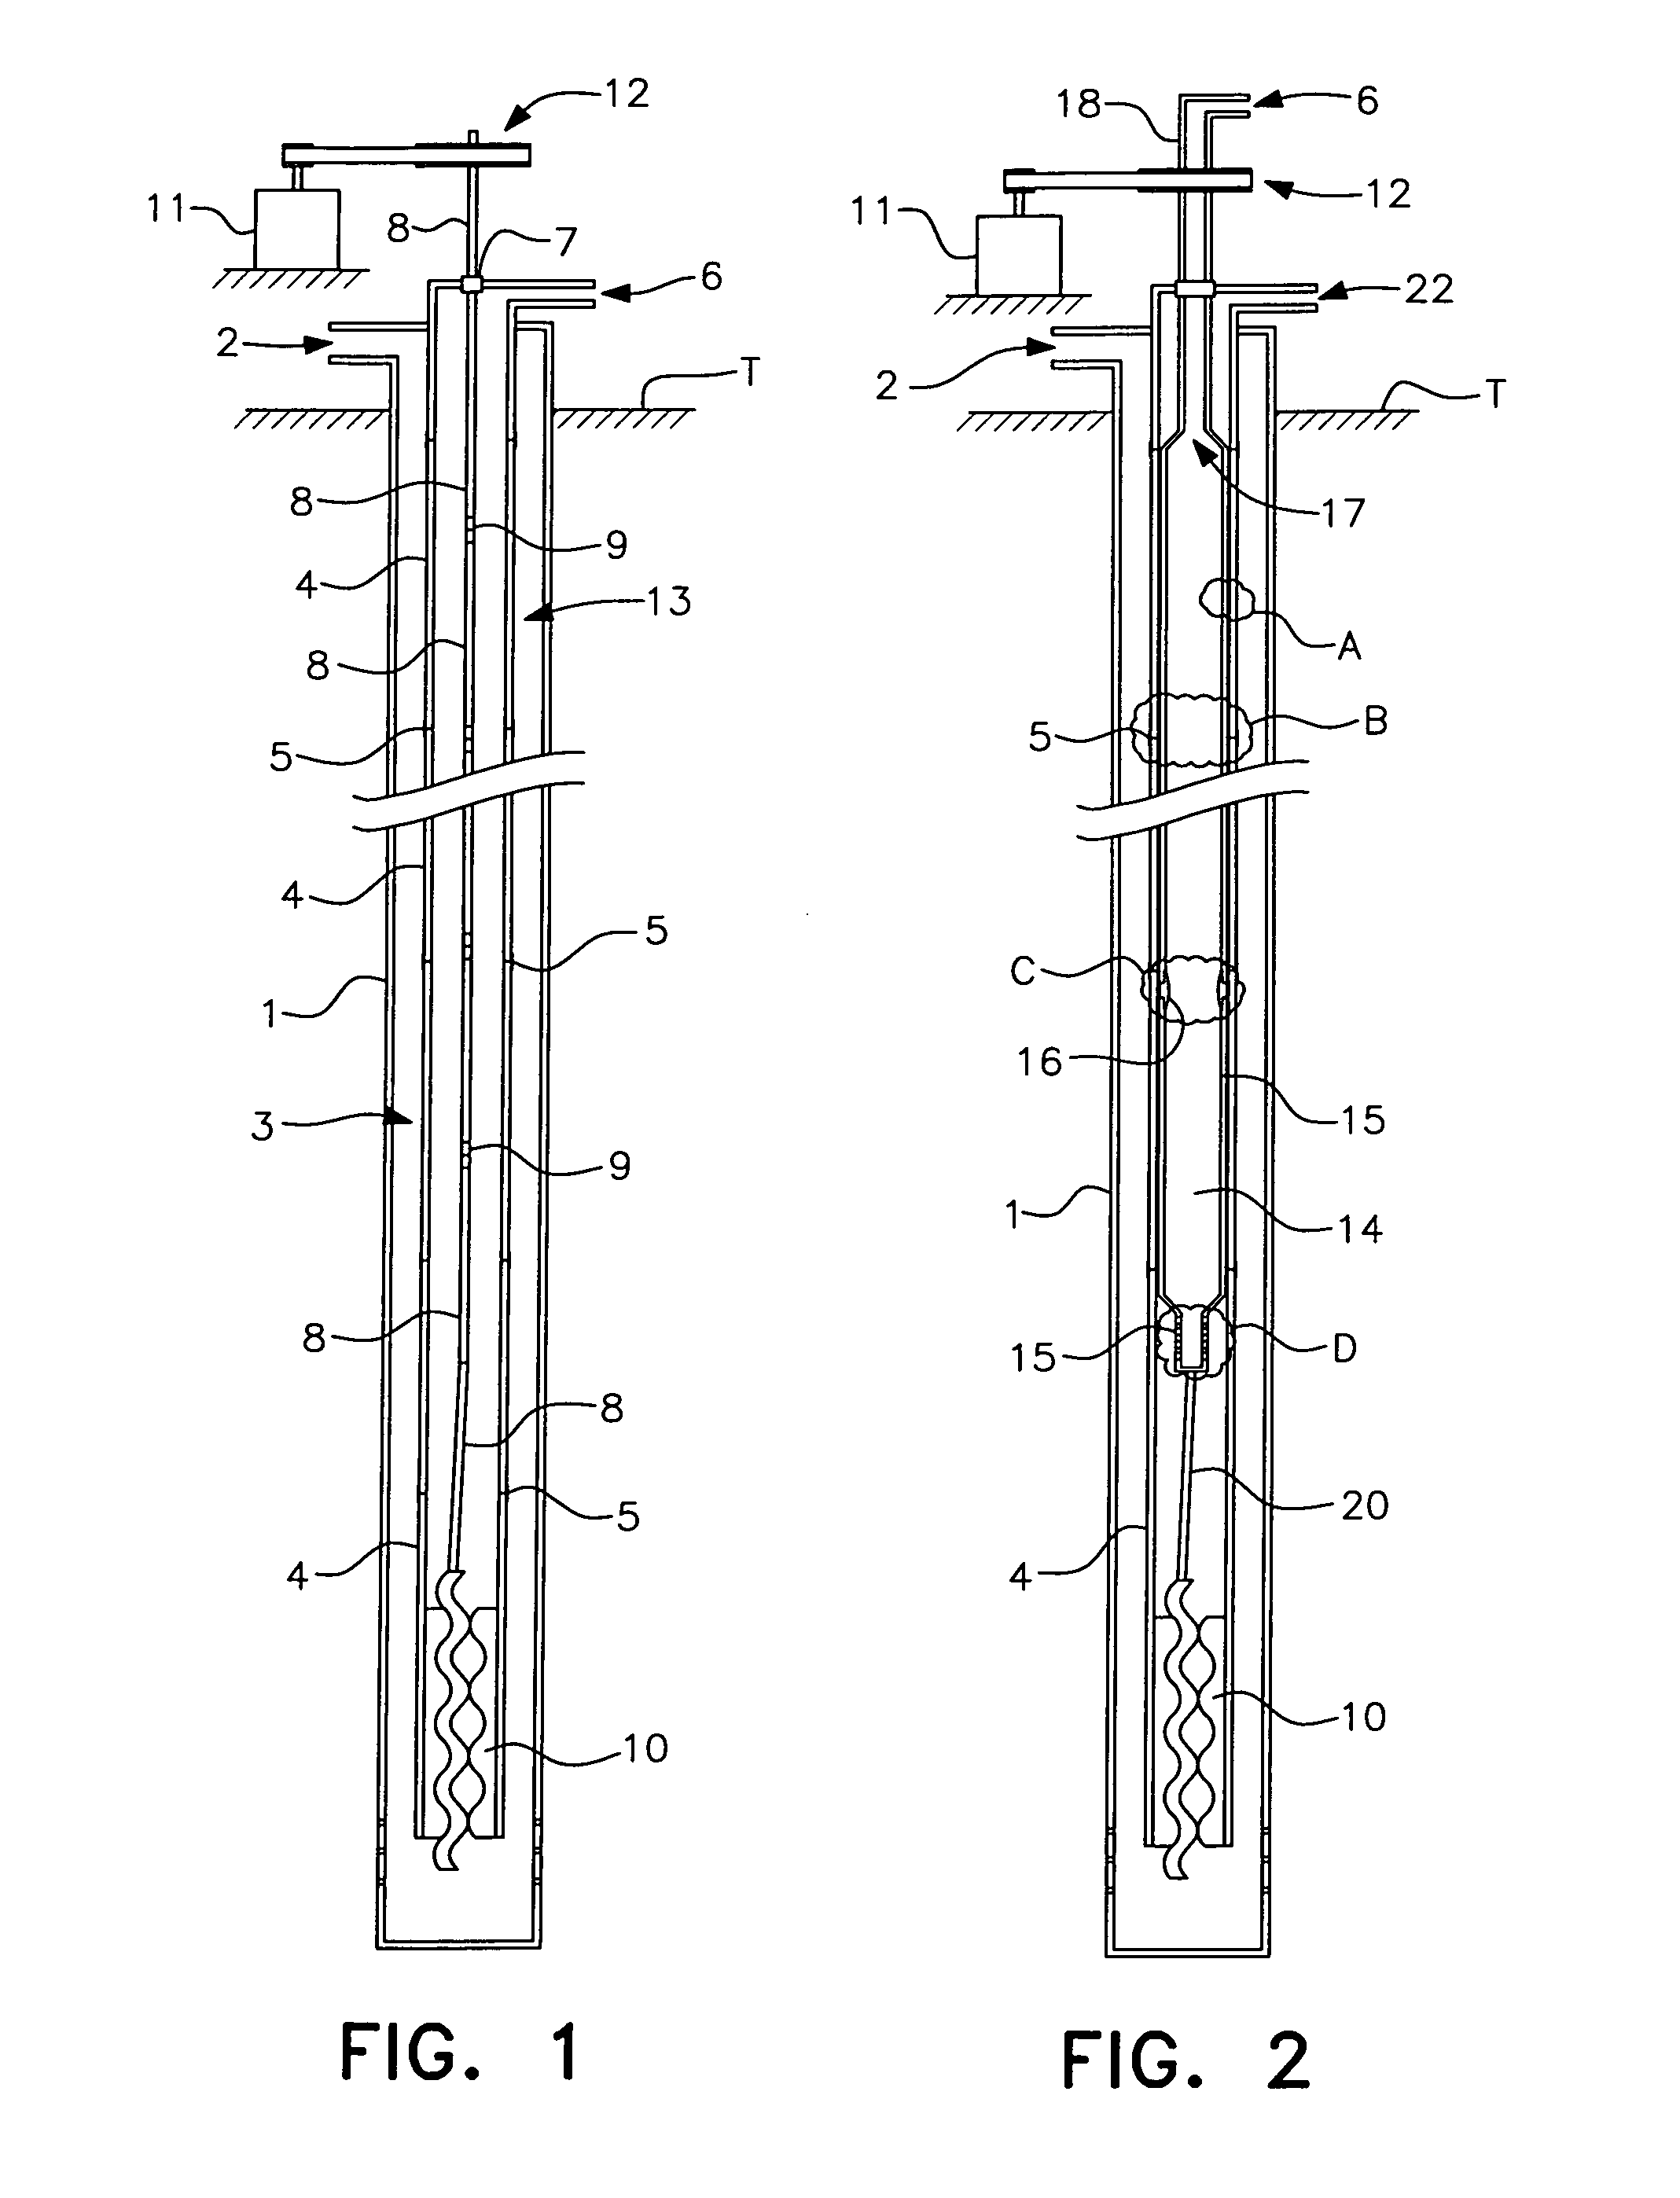 Arrangement for hydrocarbon extraction in wells using progressive cavity pumps